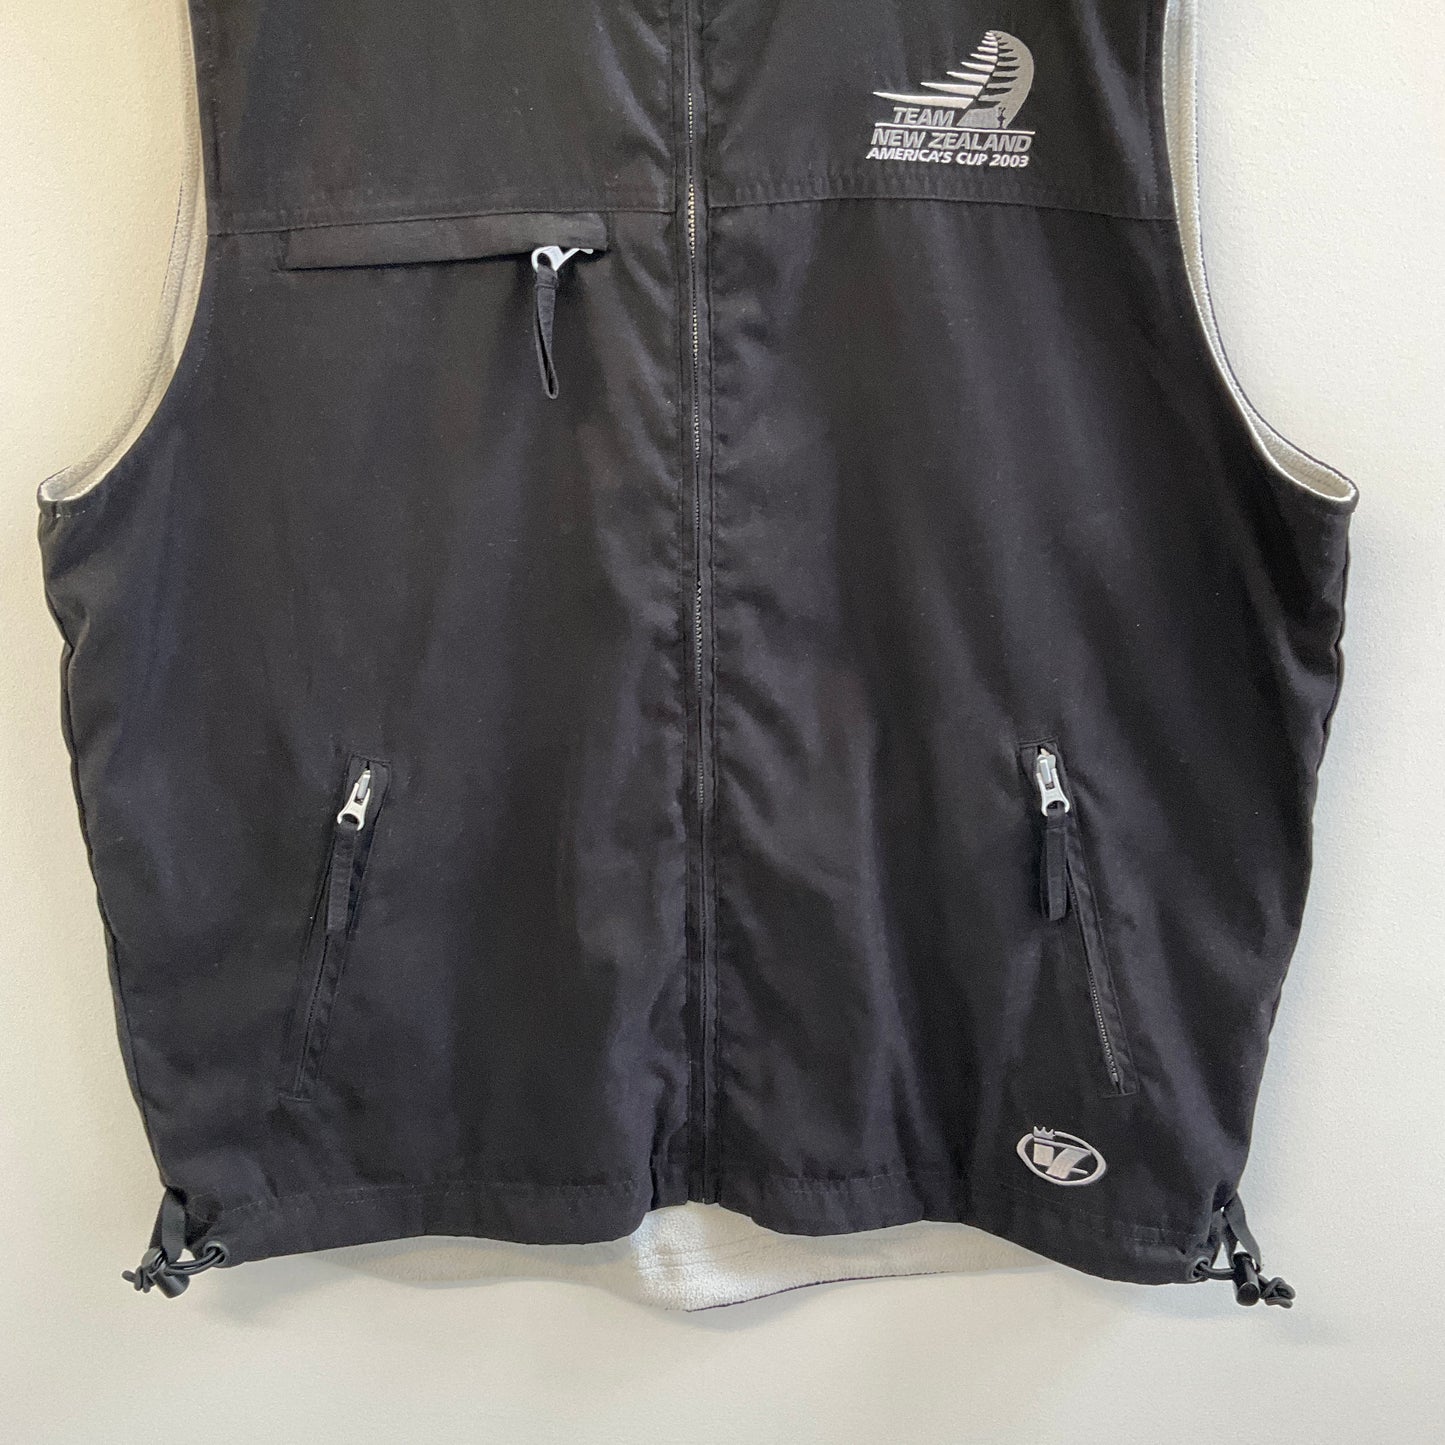 Line 7 - Team NZ America's Cup 2003 Vest